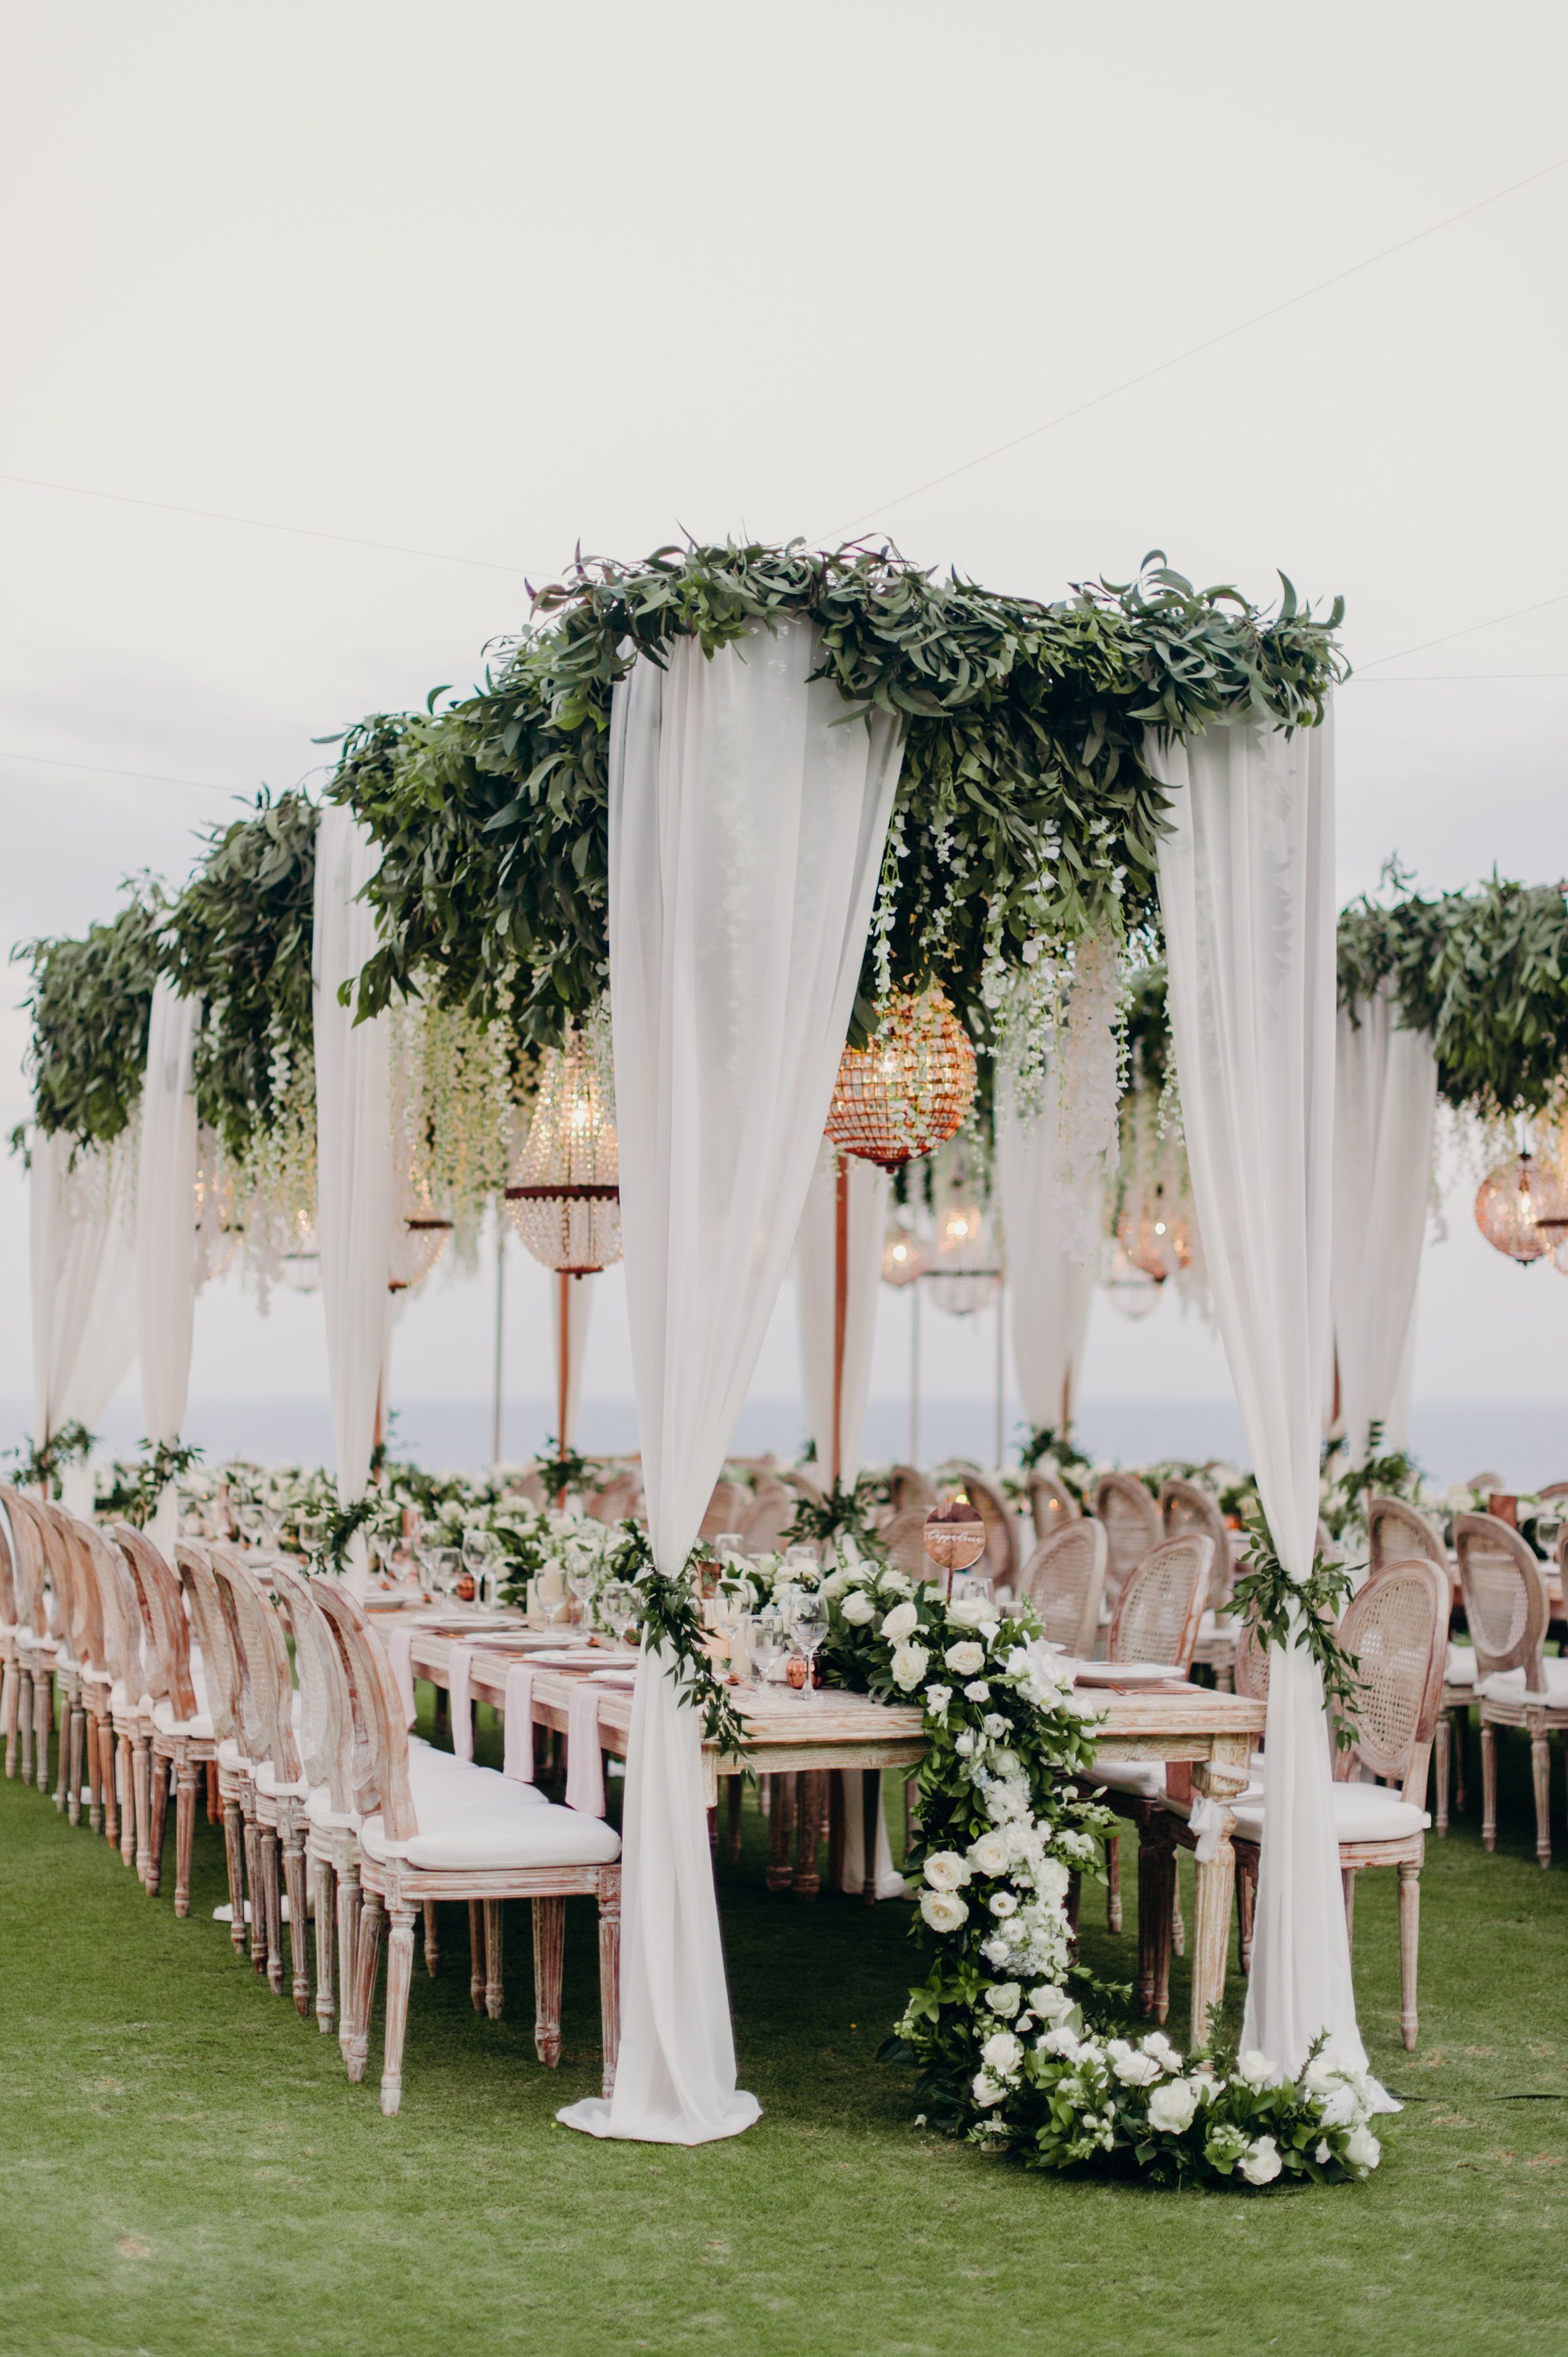 Hannah Polites Ties the Knot in STUNNING Bali Affair -   8 beach wedding Rose Gold ideas